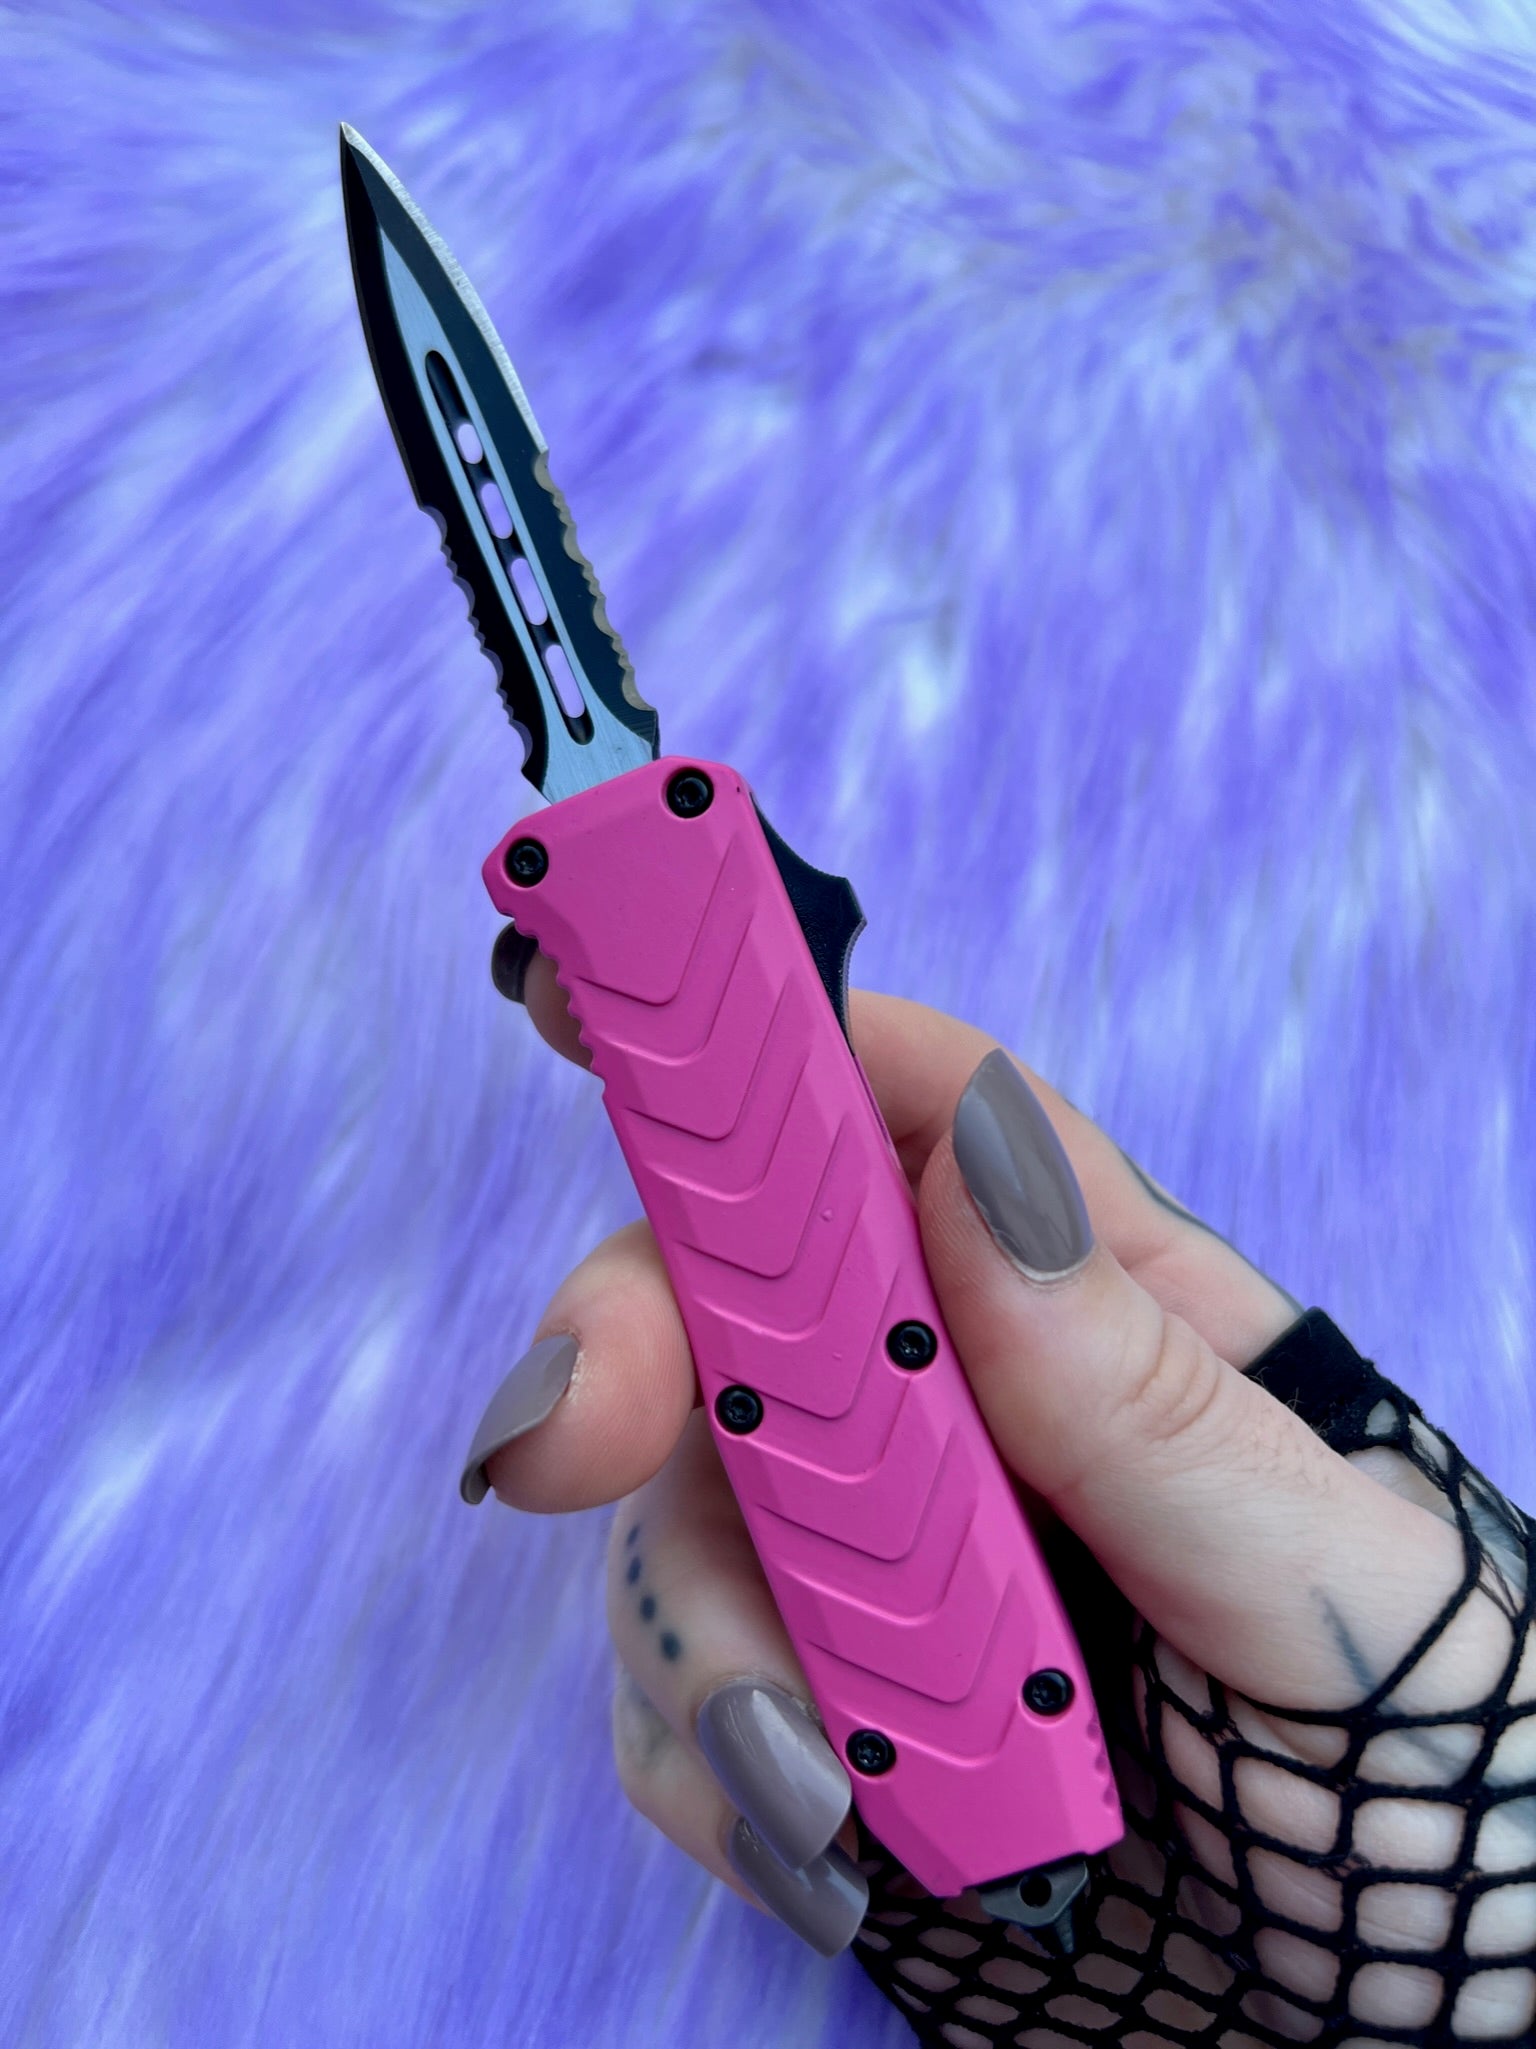 Tecna OTF Knife - Blades For Babes - Automatic - 2